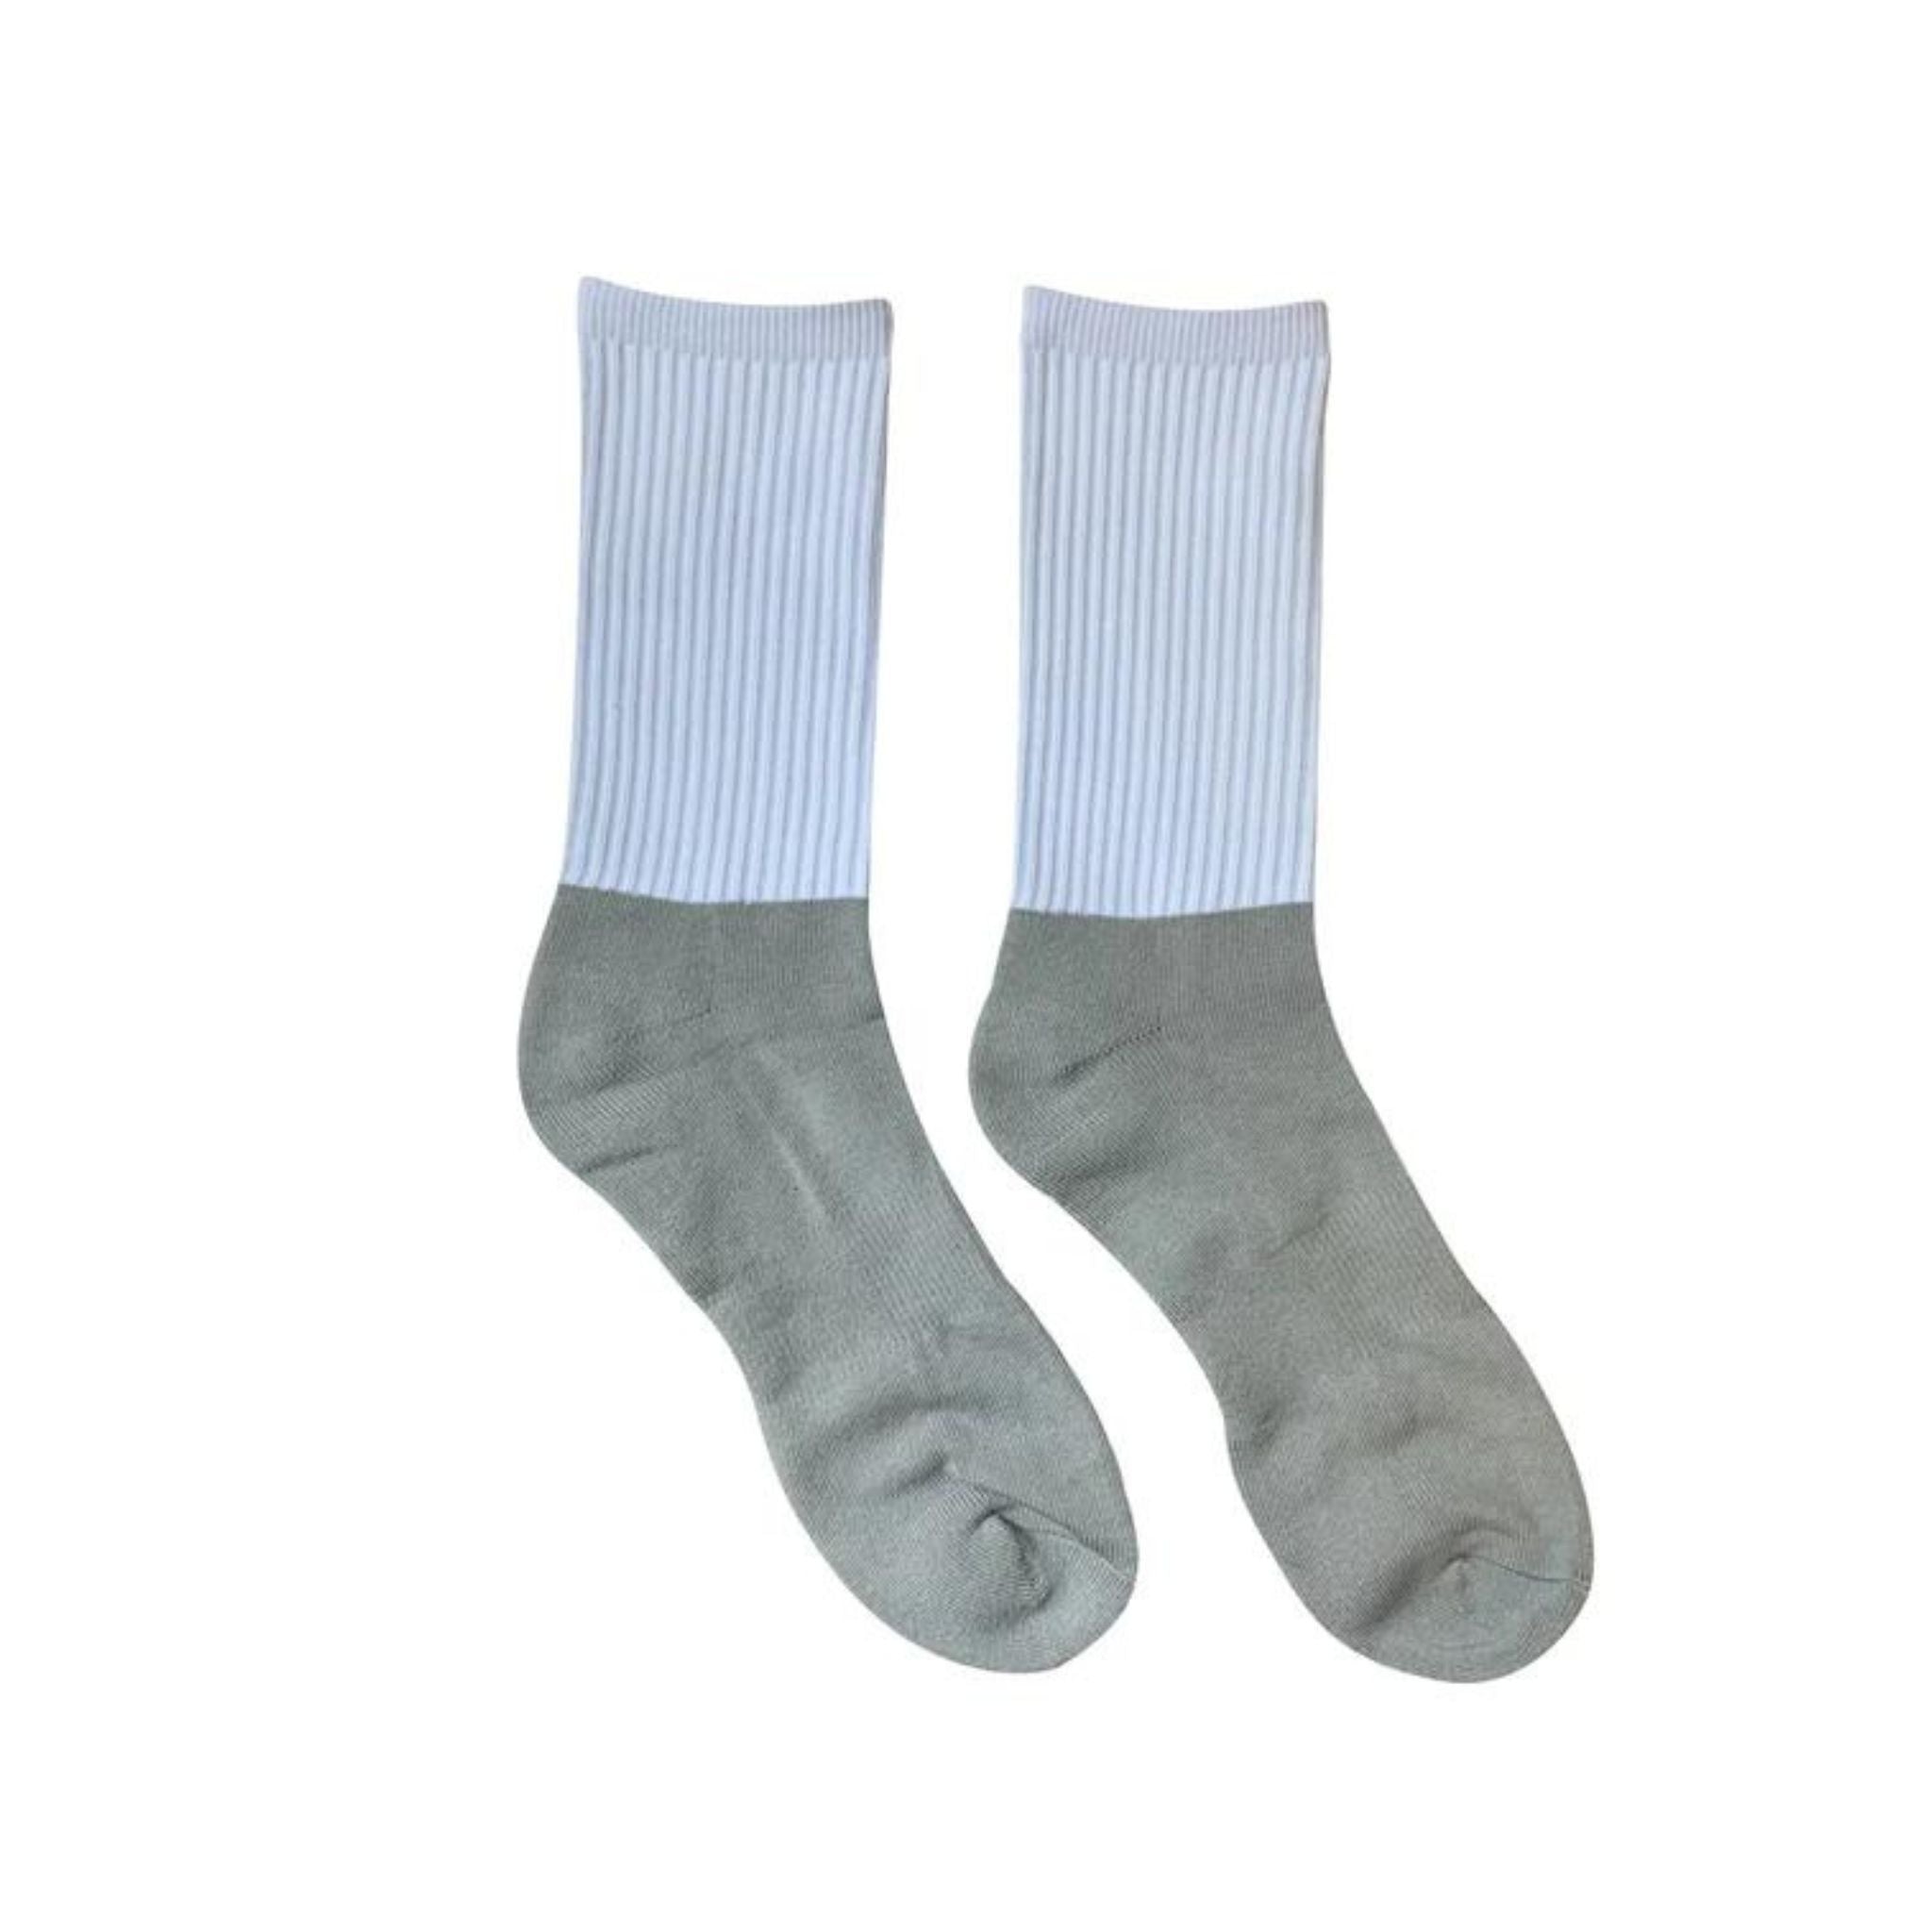 Blank Gray Socks